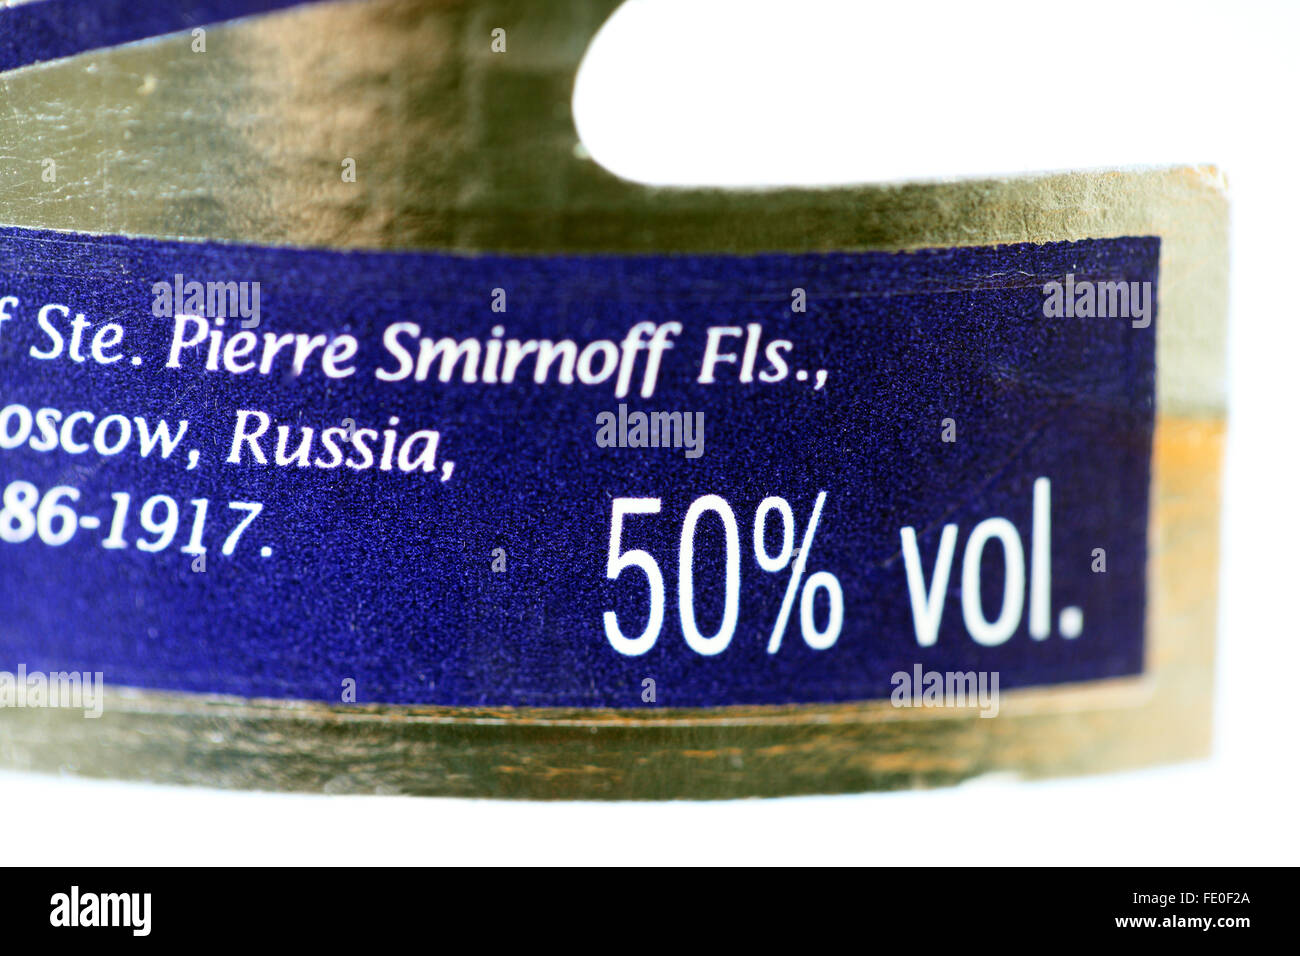 Label of bottle of blue label Smirnoff Vokda showing 50% volume Stock Photo  - Alamy